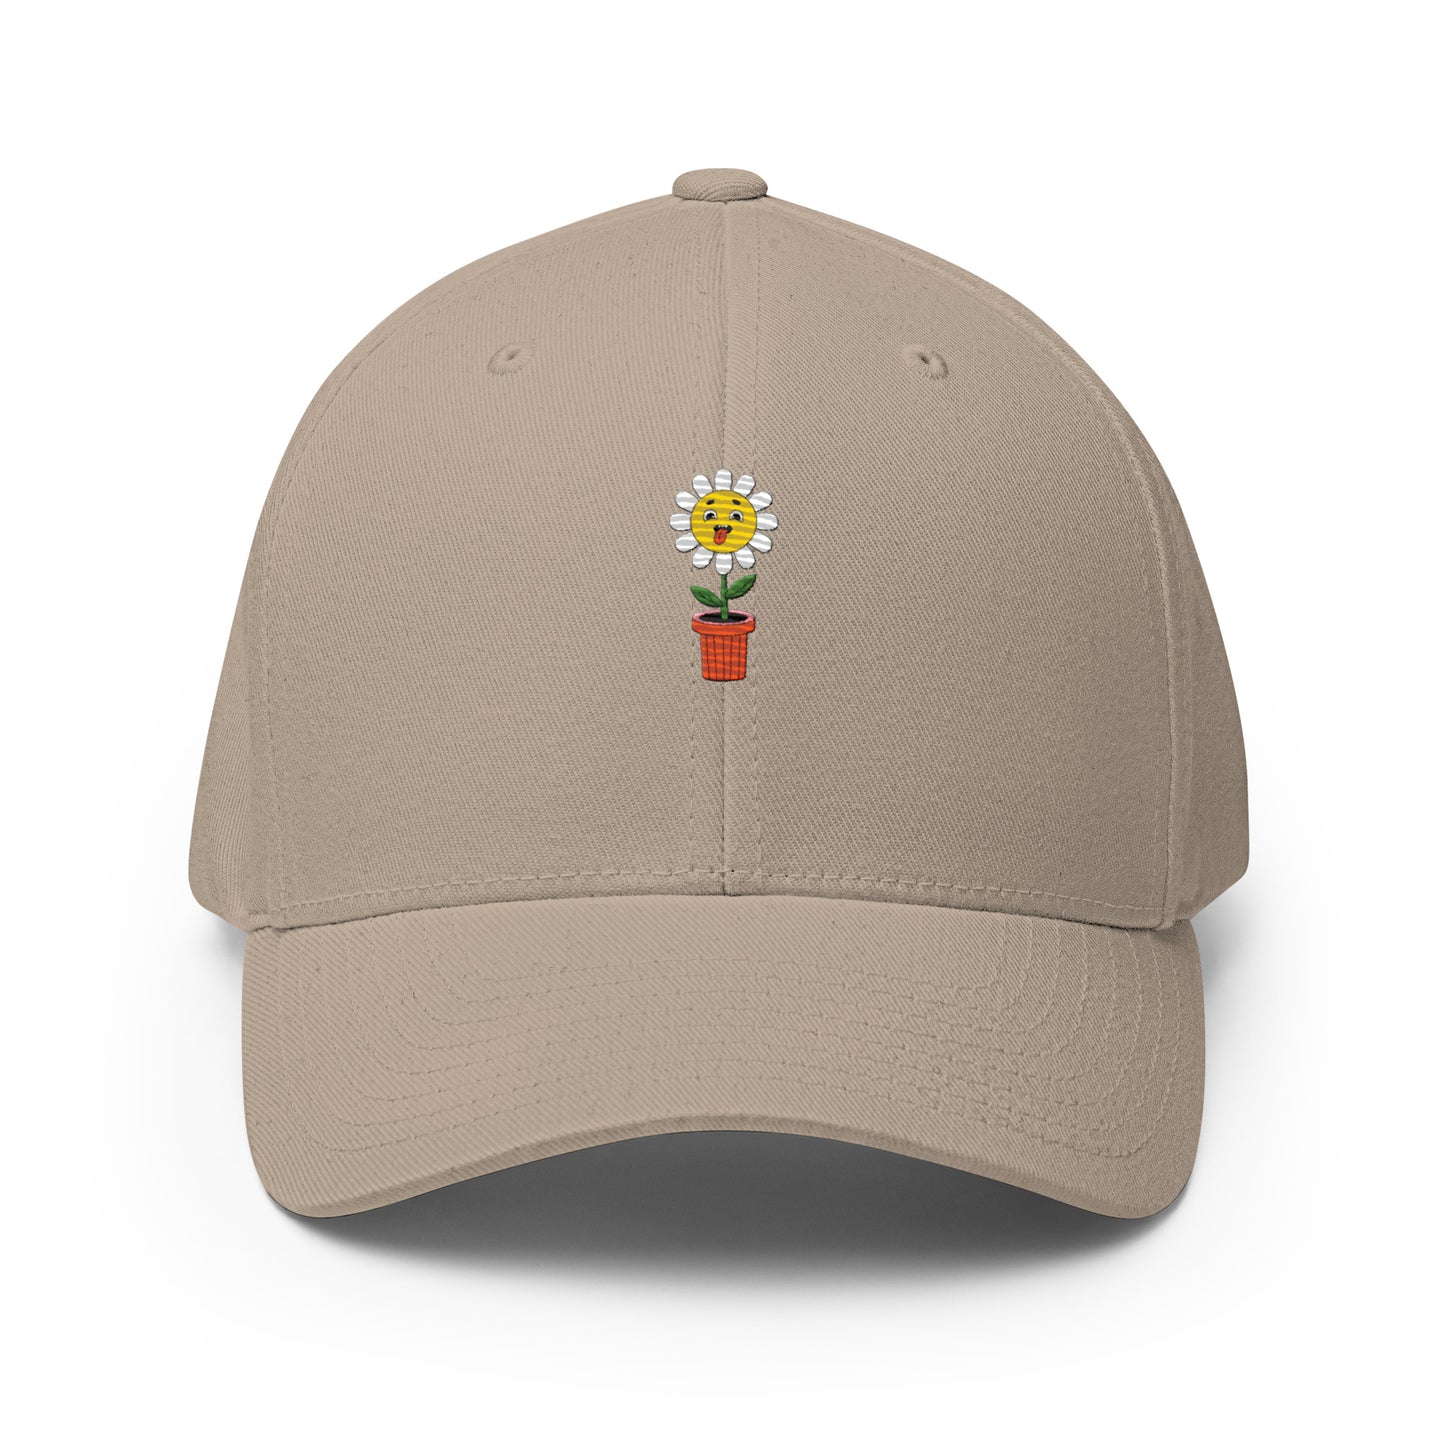 Baseball Cap with Flower Symbol